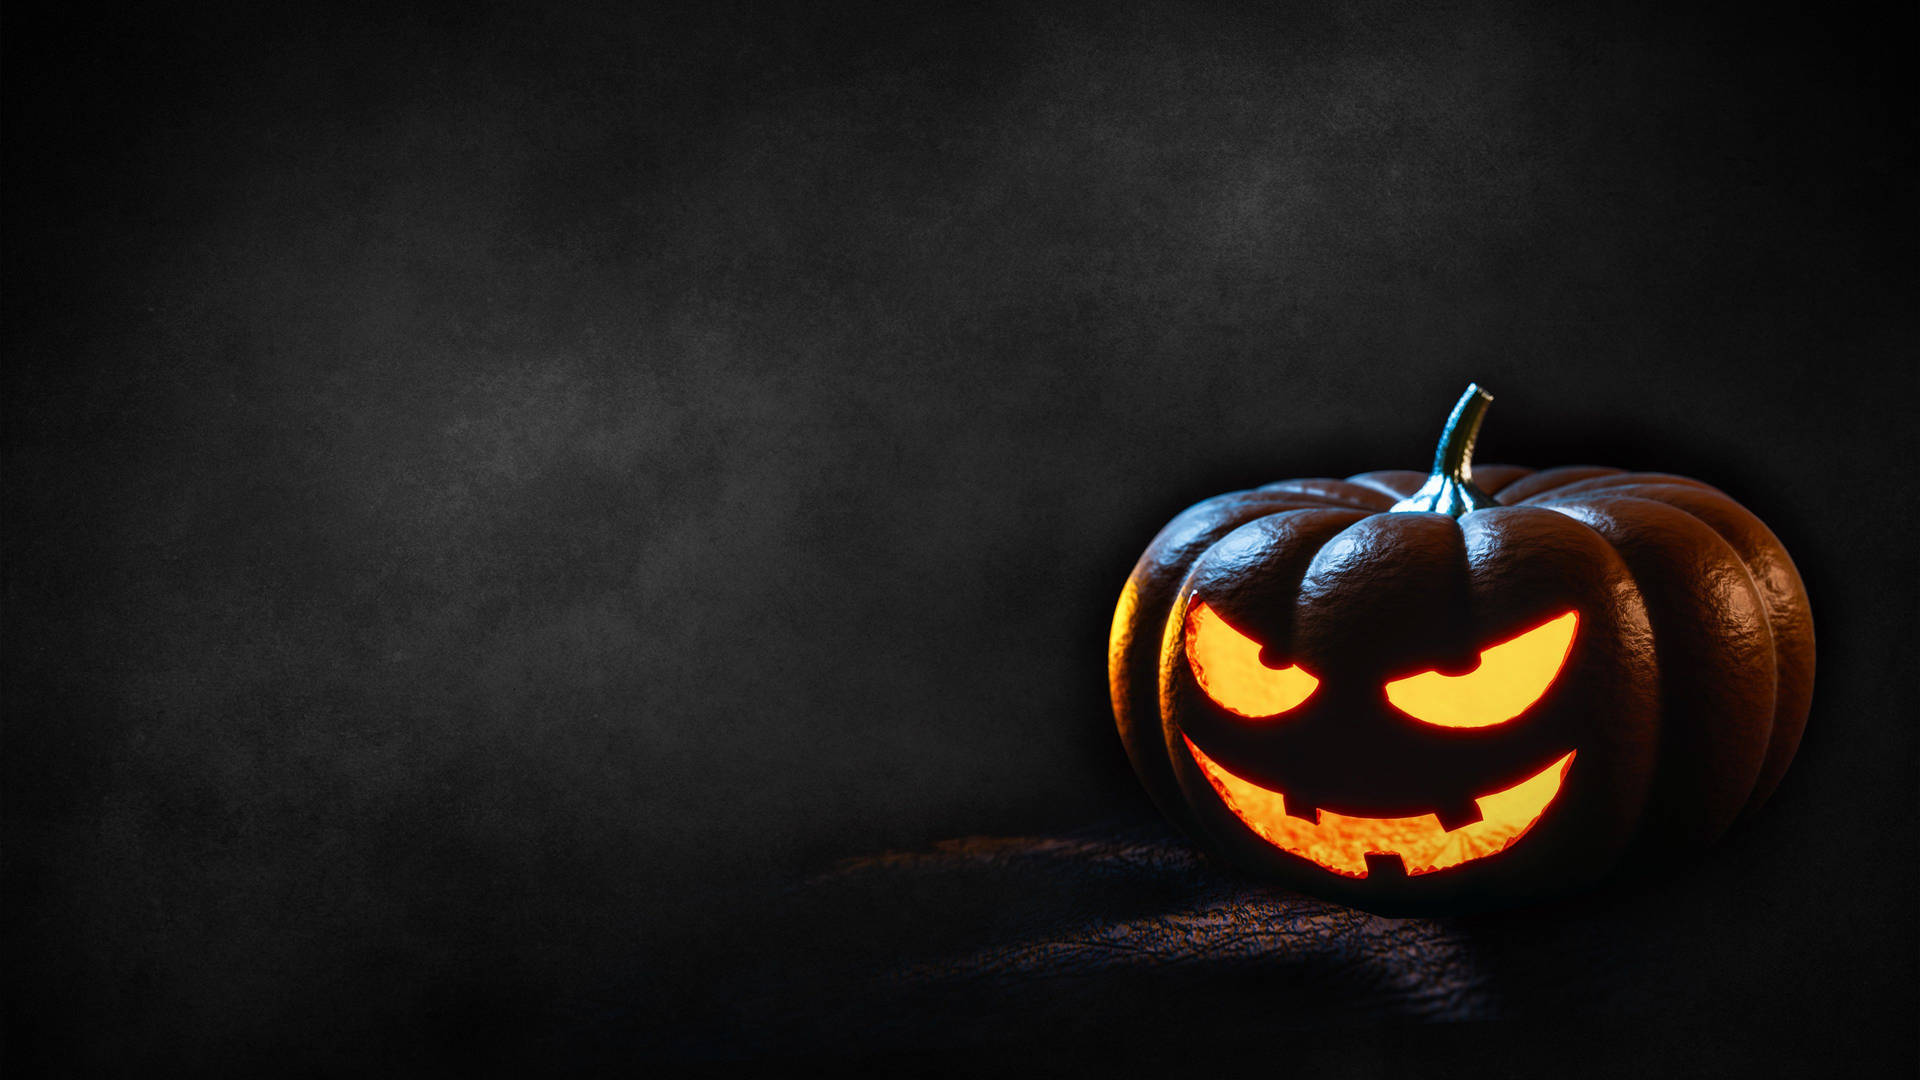 Dark Halloween Jack-o'-lantern Wallpaper